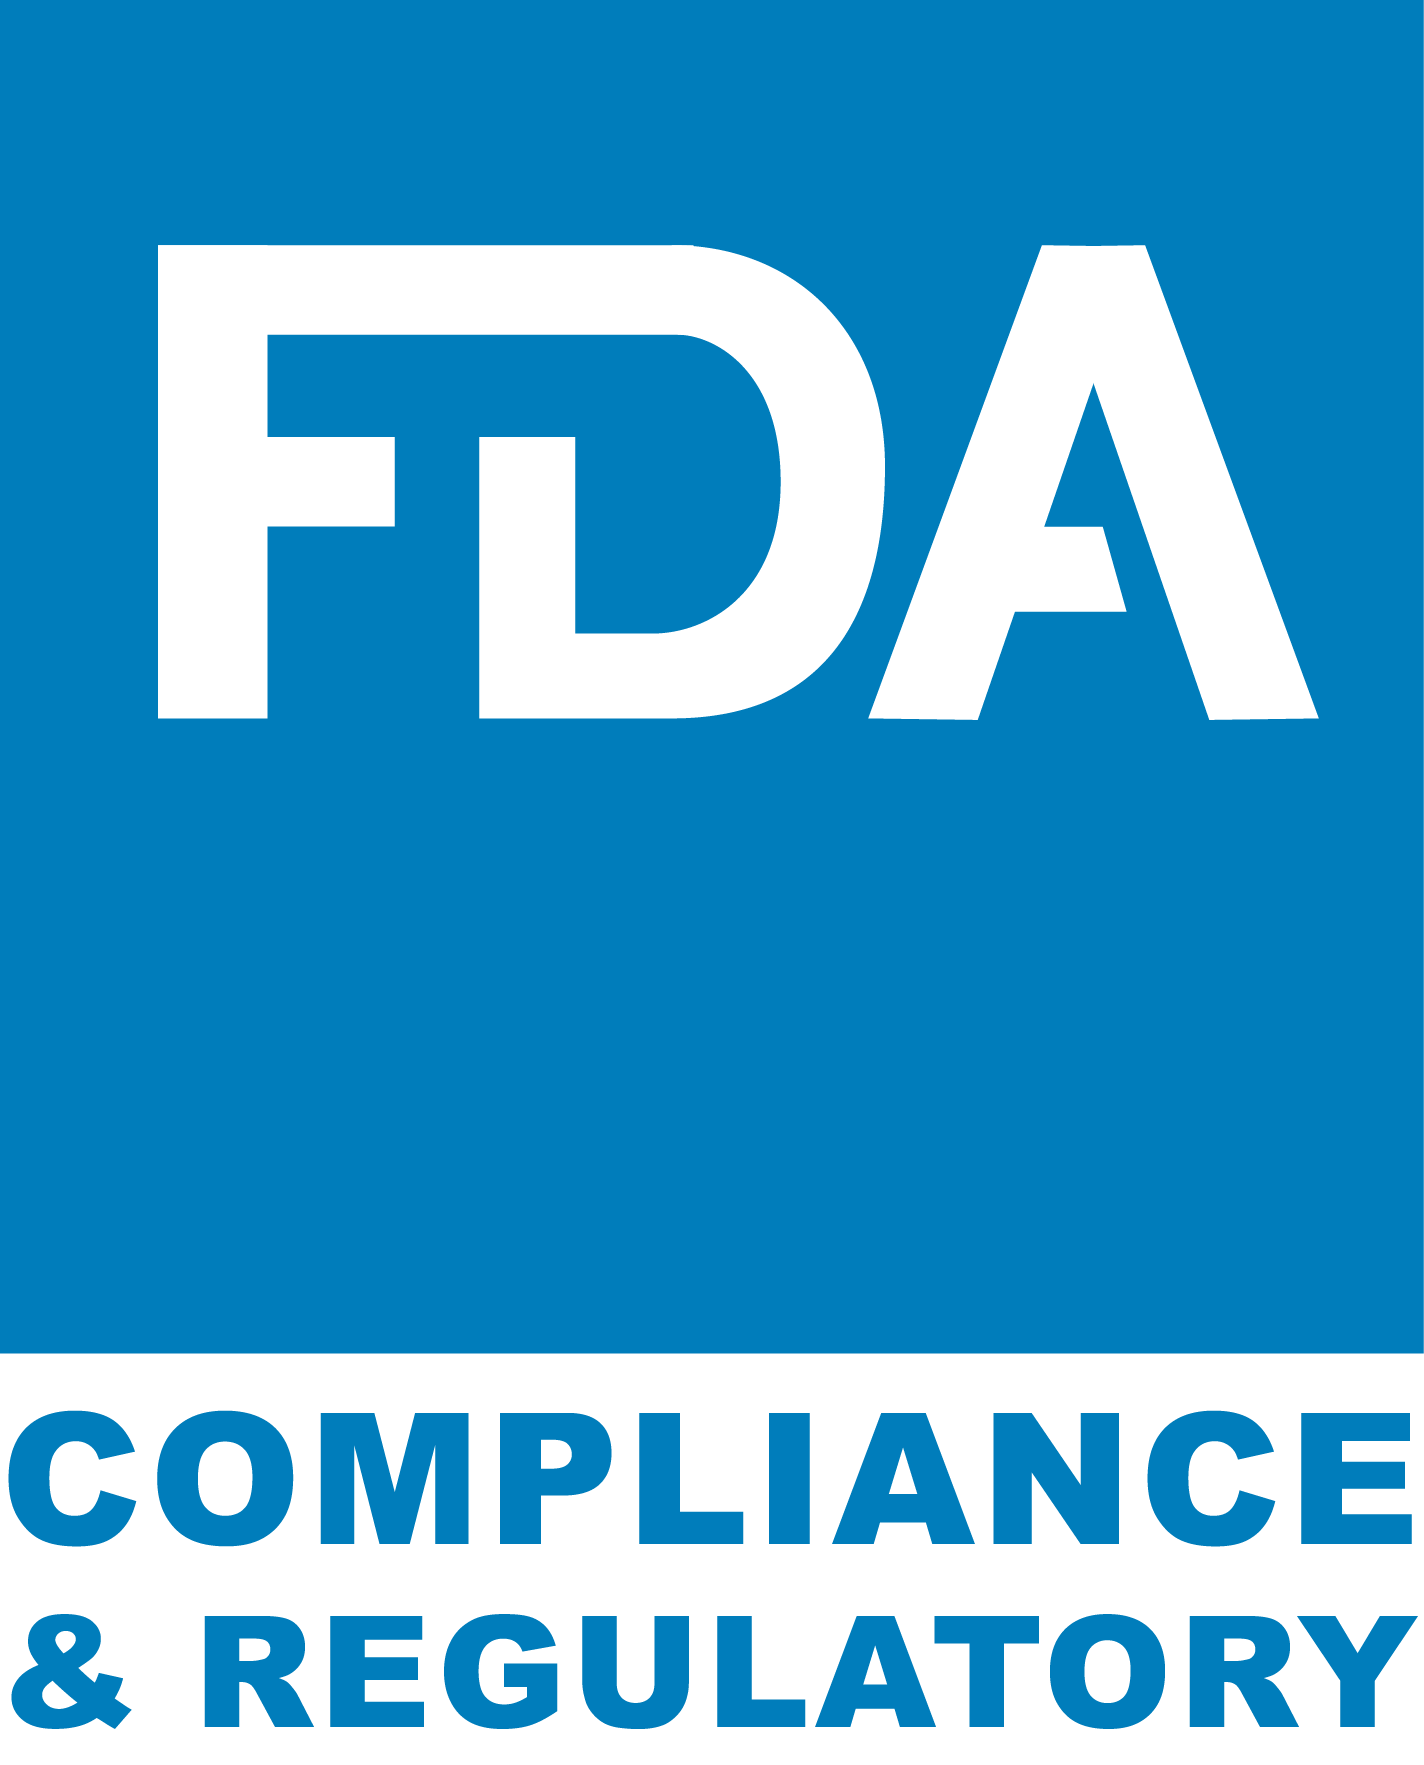 USFDA Compliance & Regulatory